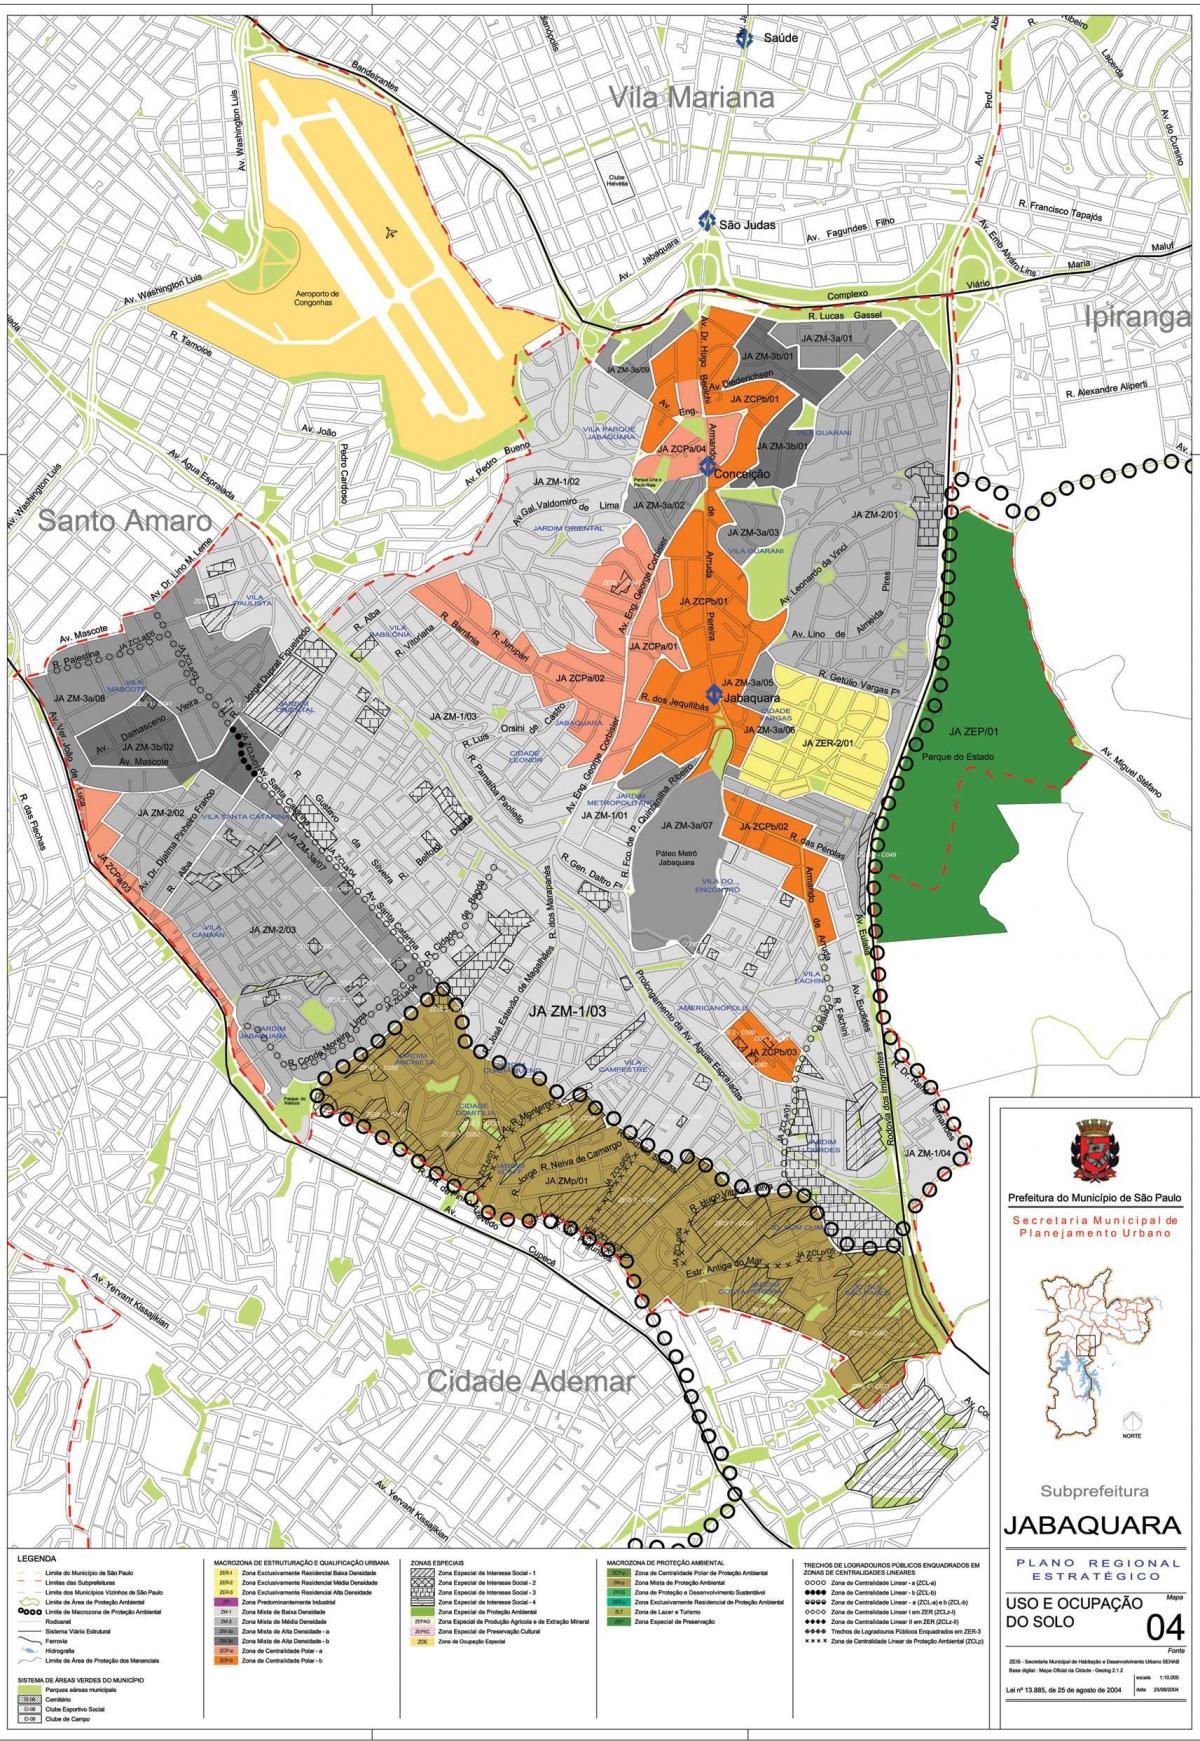 Map of Jabaquara São Paulo - Occupation of the soil